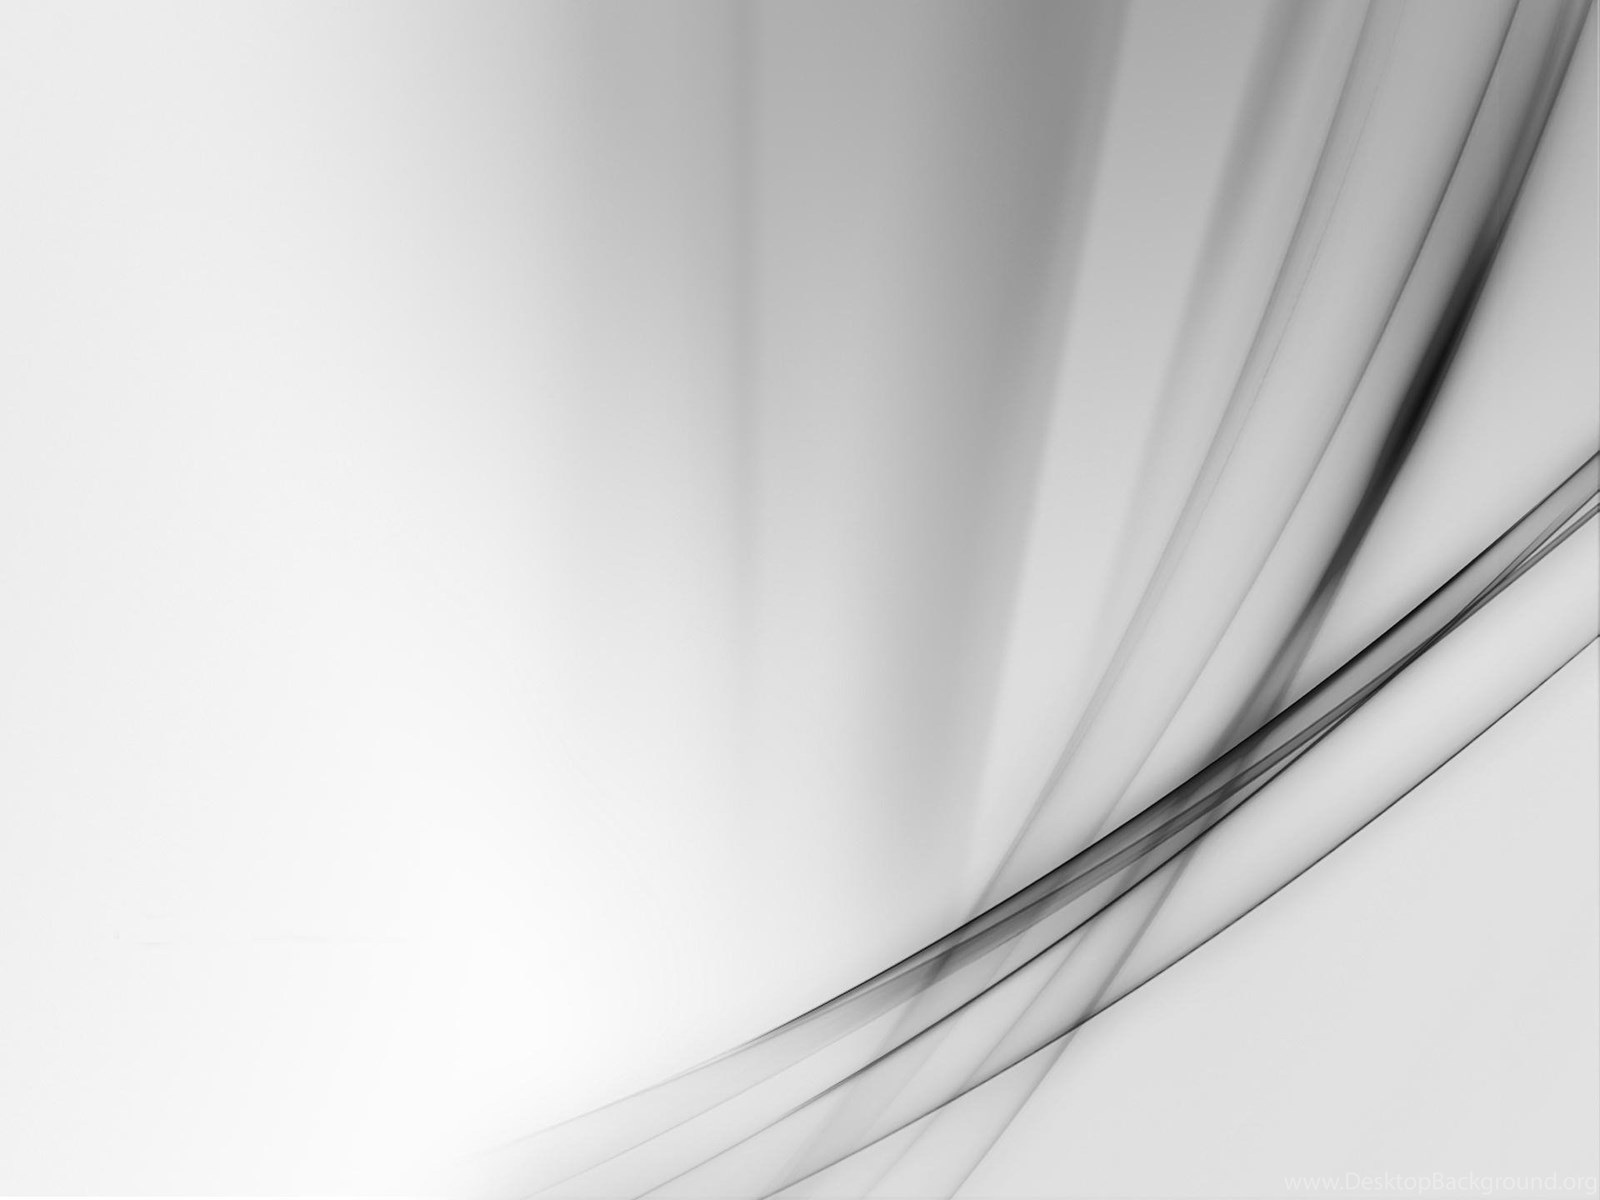 Download Cool White Wallpaper Images GHJ8 Fullscreen Standart 4:3 1600x1200...